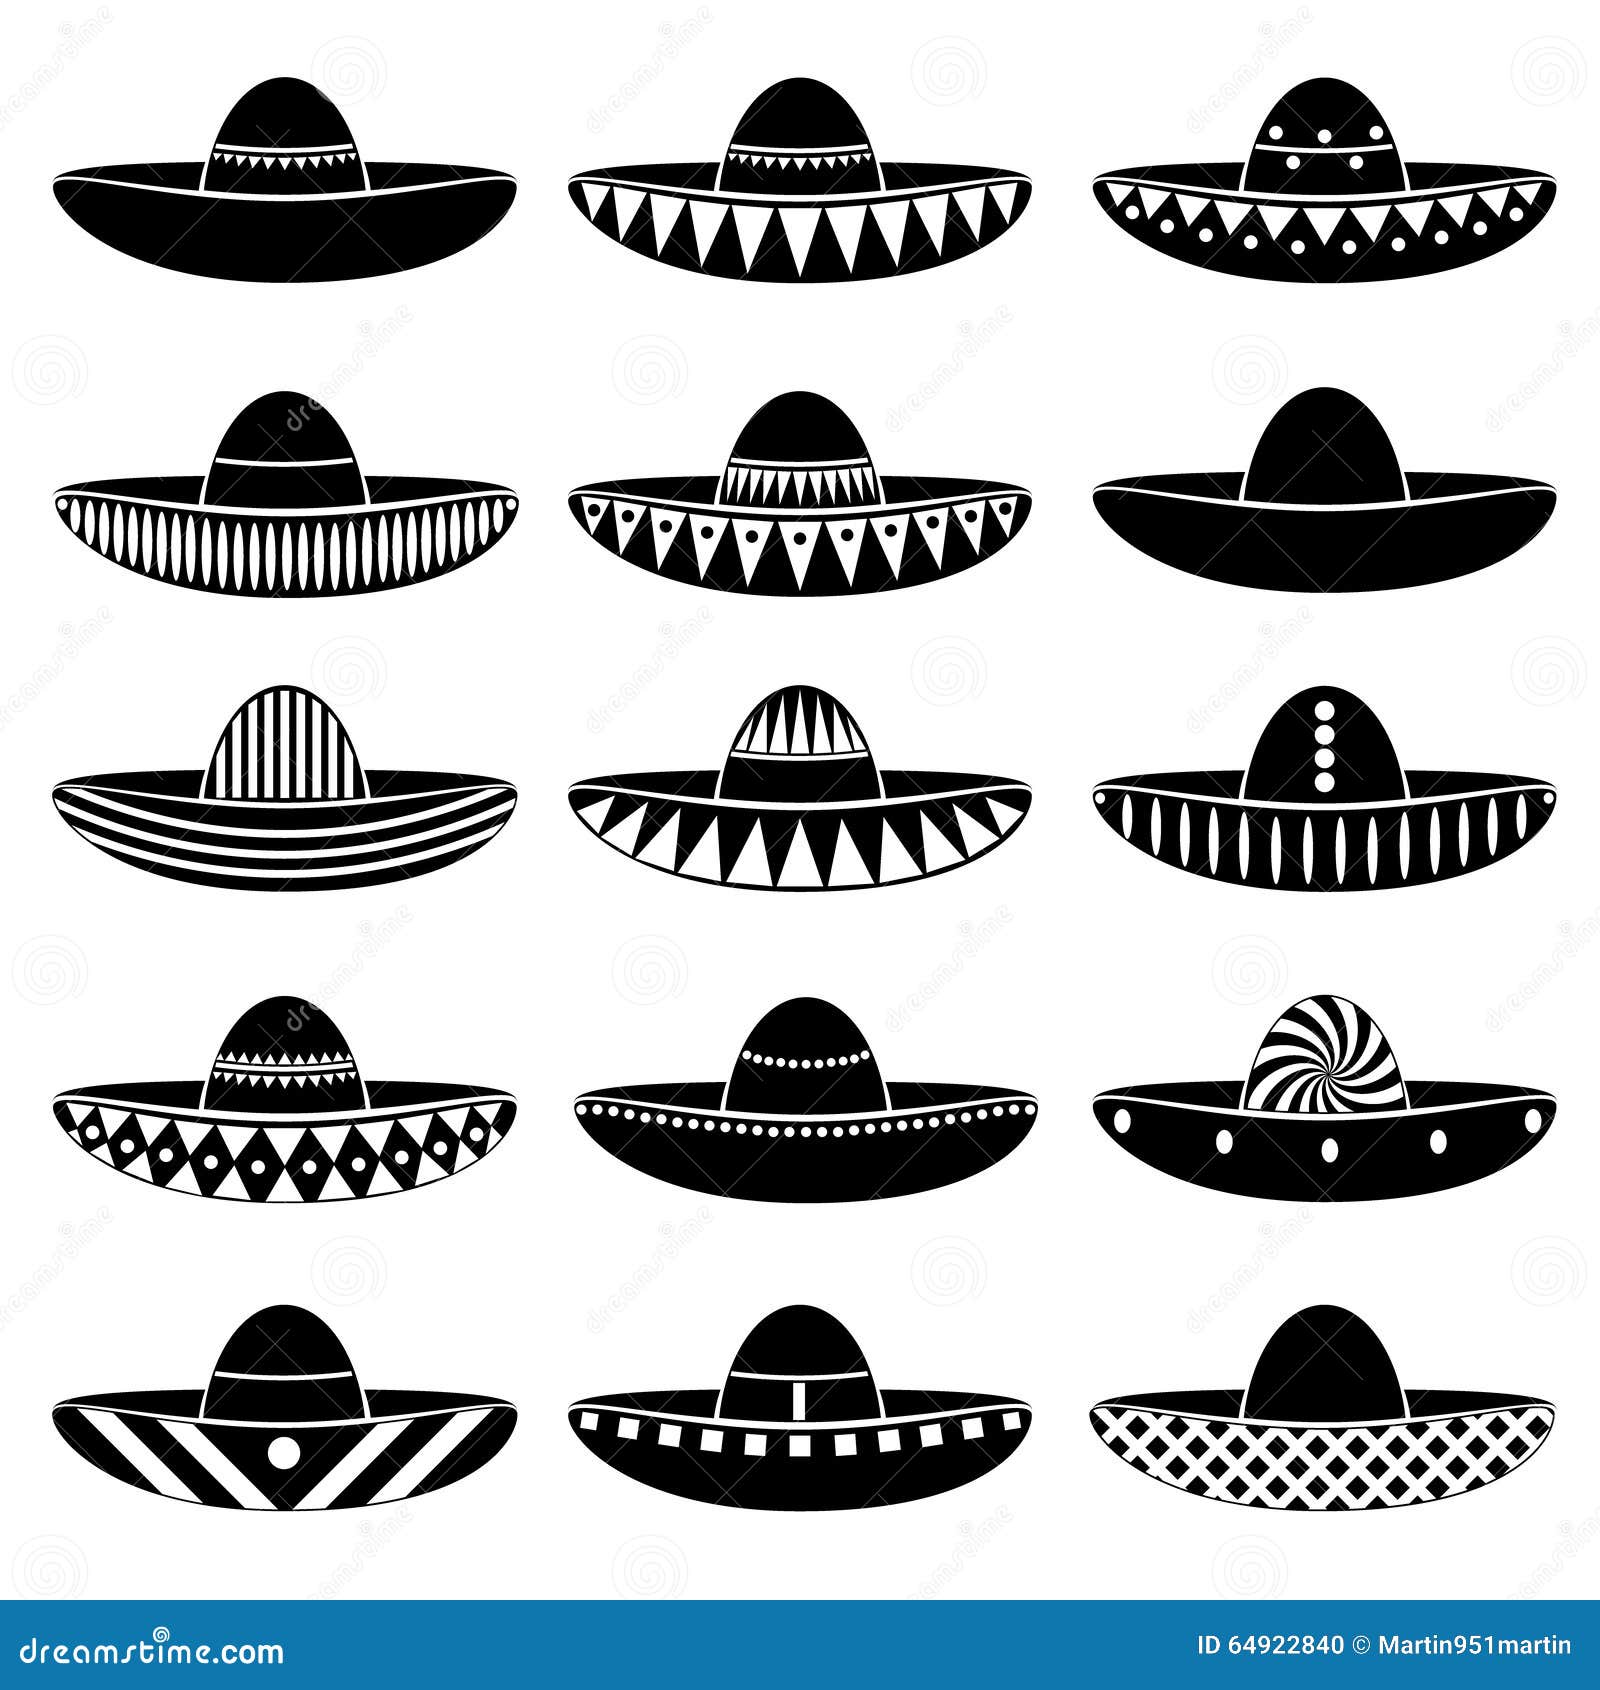 mexico sombrero hat variations icons set